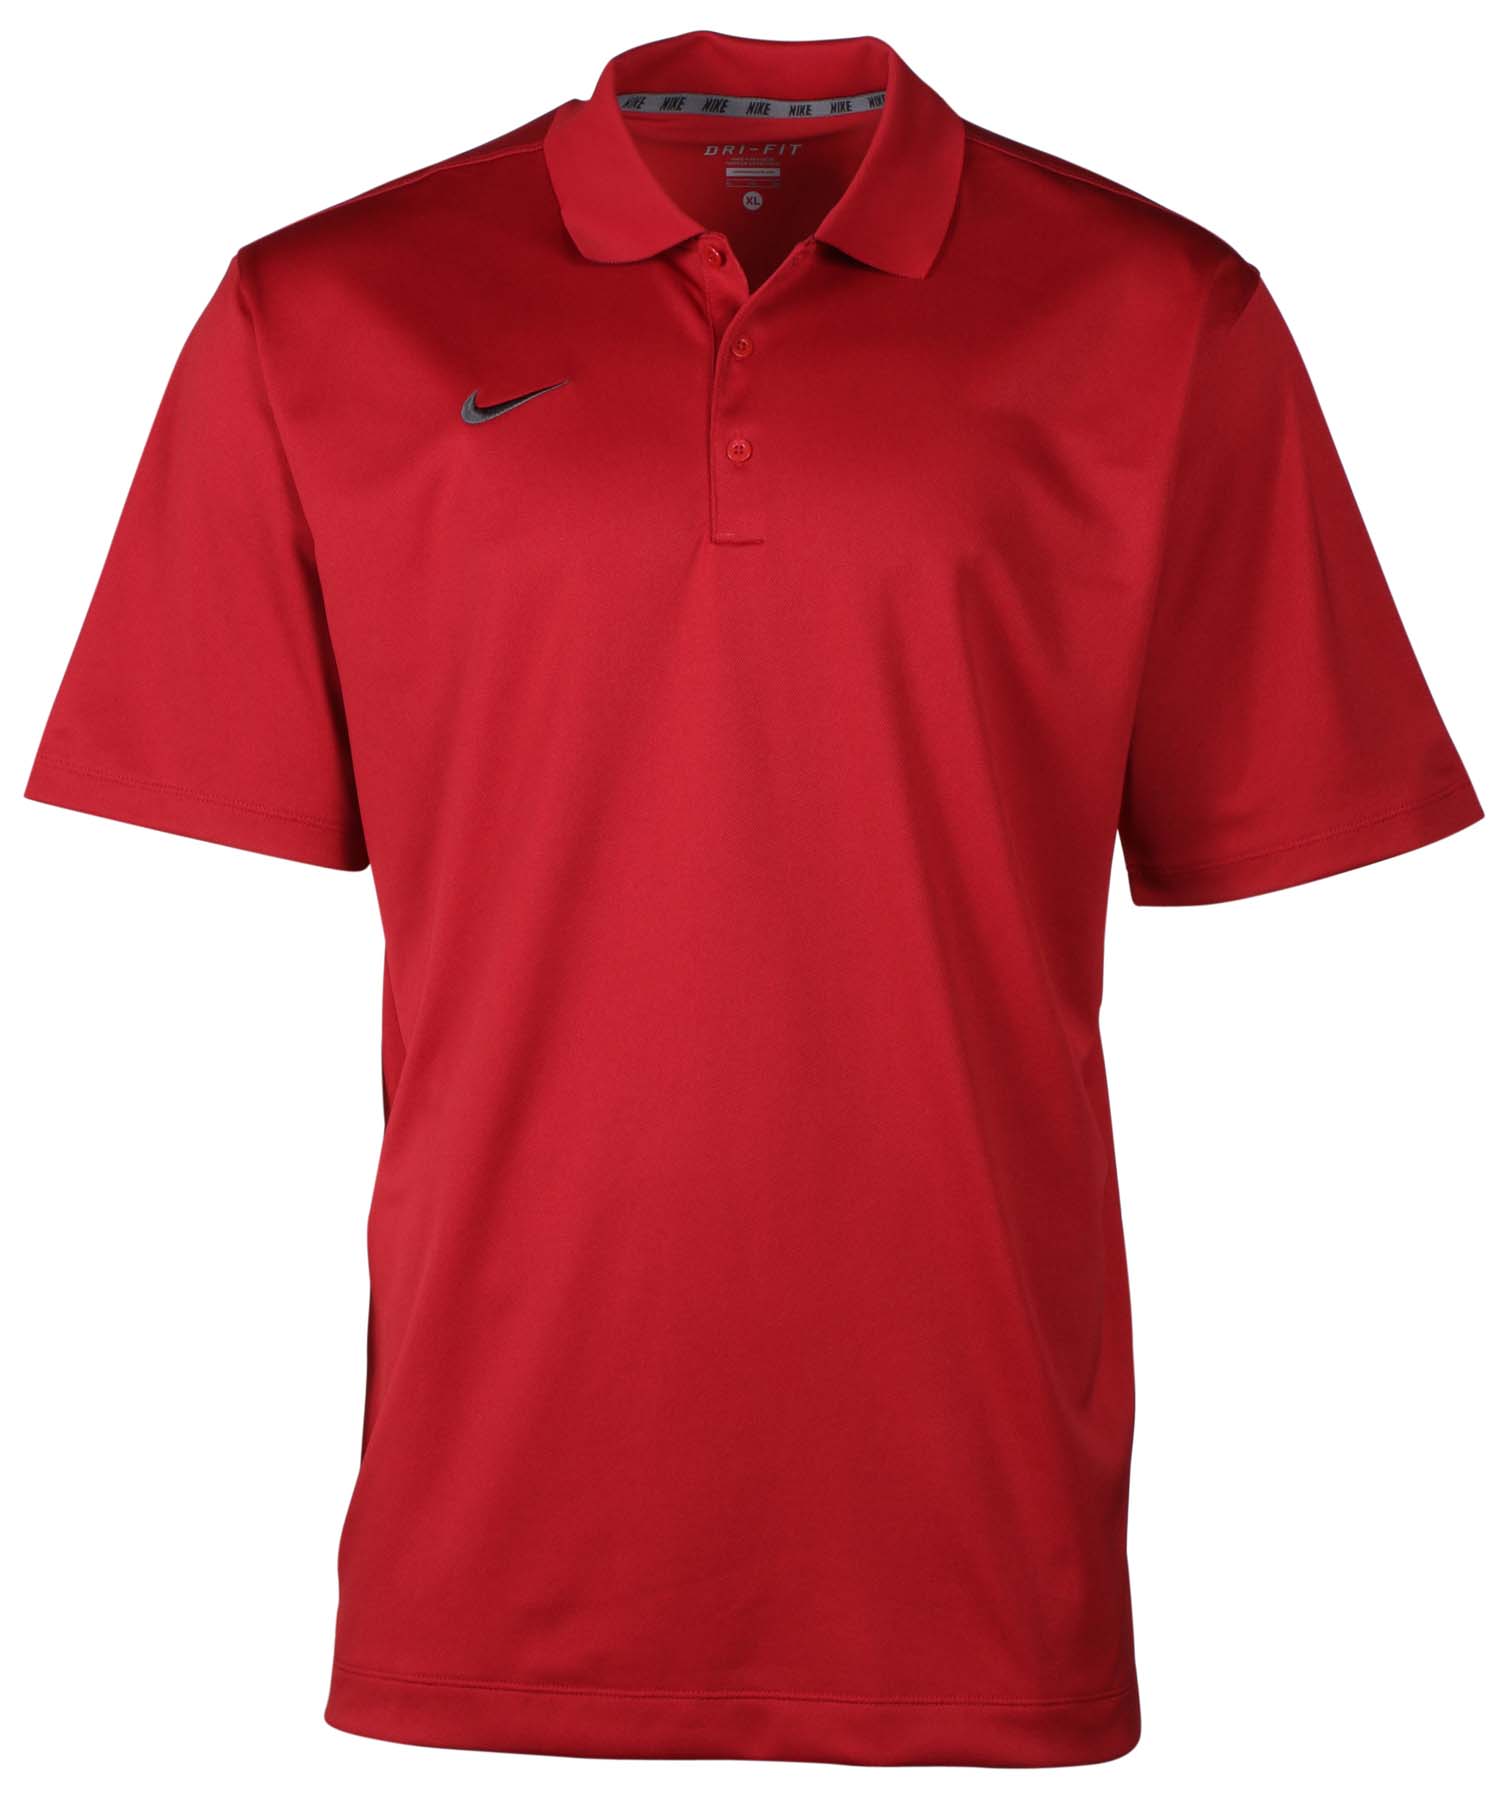 Nike Men's Dri-Fit Football Polo Shirt - image 1 of 3